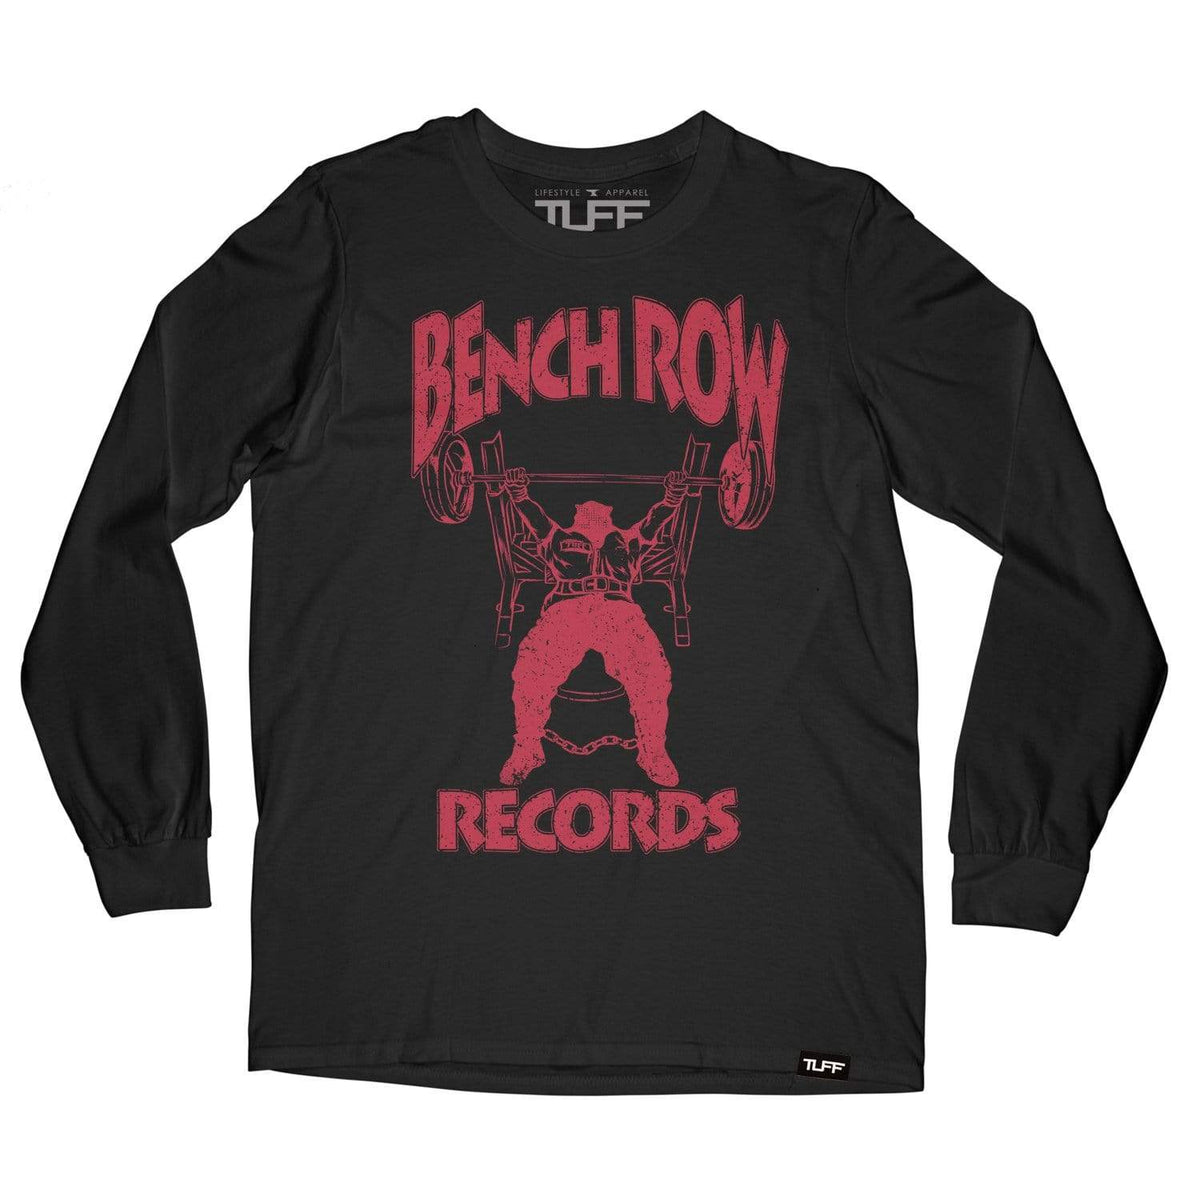 Bench Row Records Long Sleeve Tee S / Black v1 TuffWraps.com